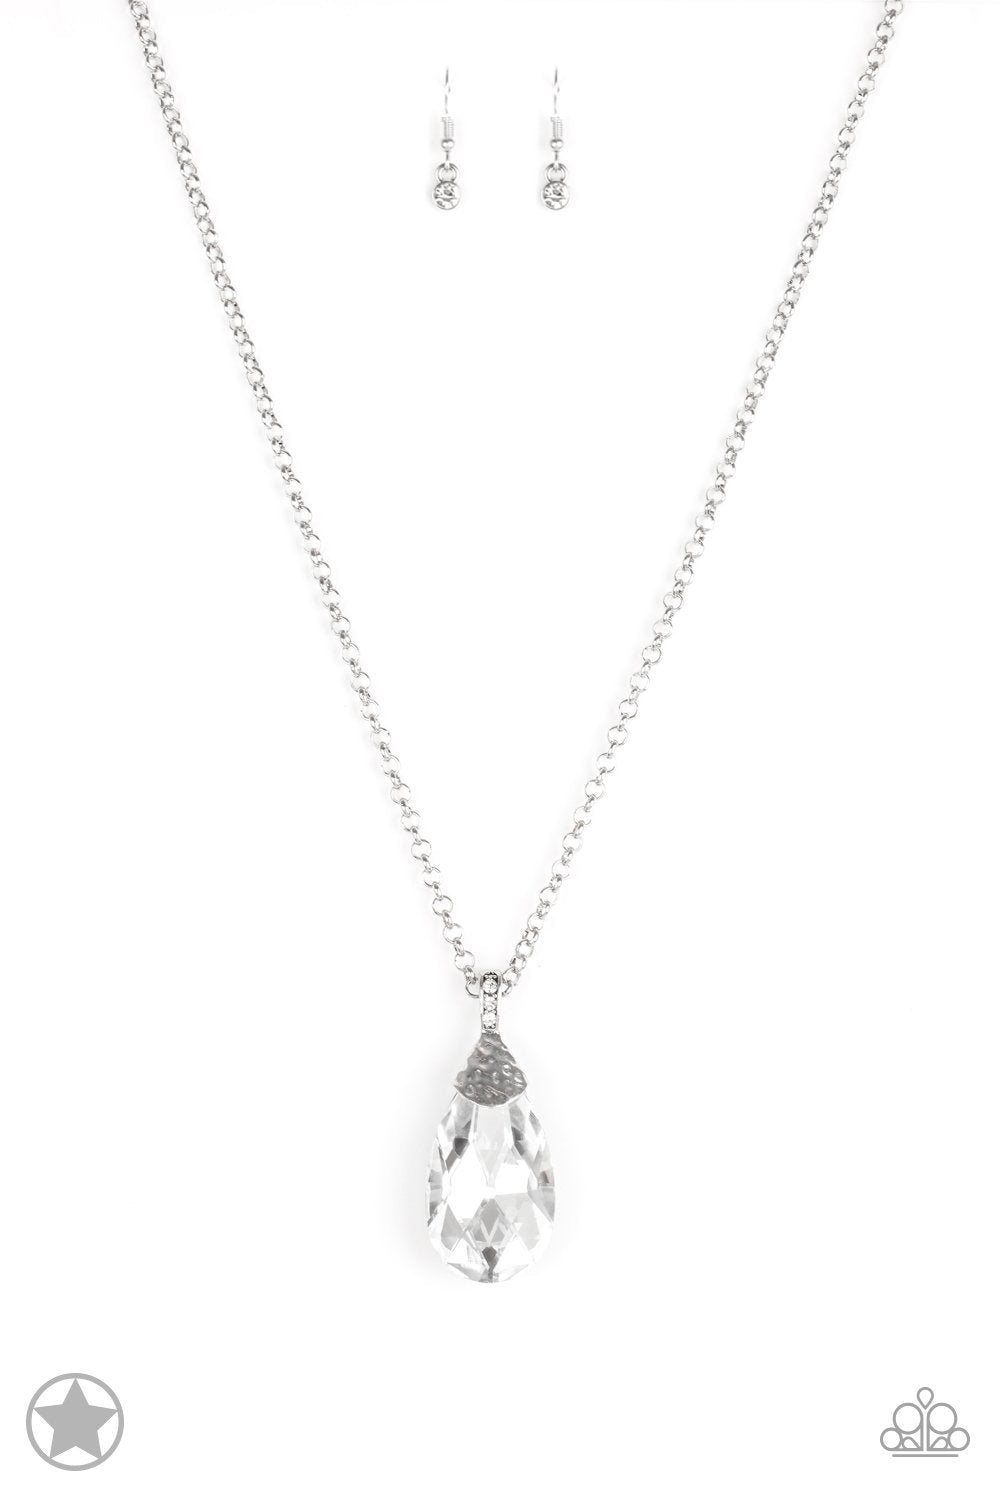 Spellbinding Sparkle White Necklace Set